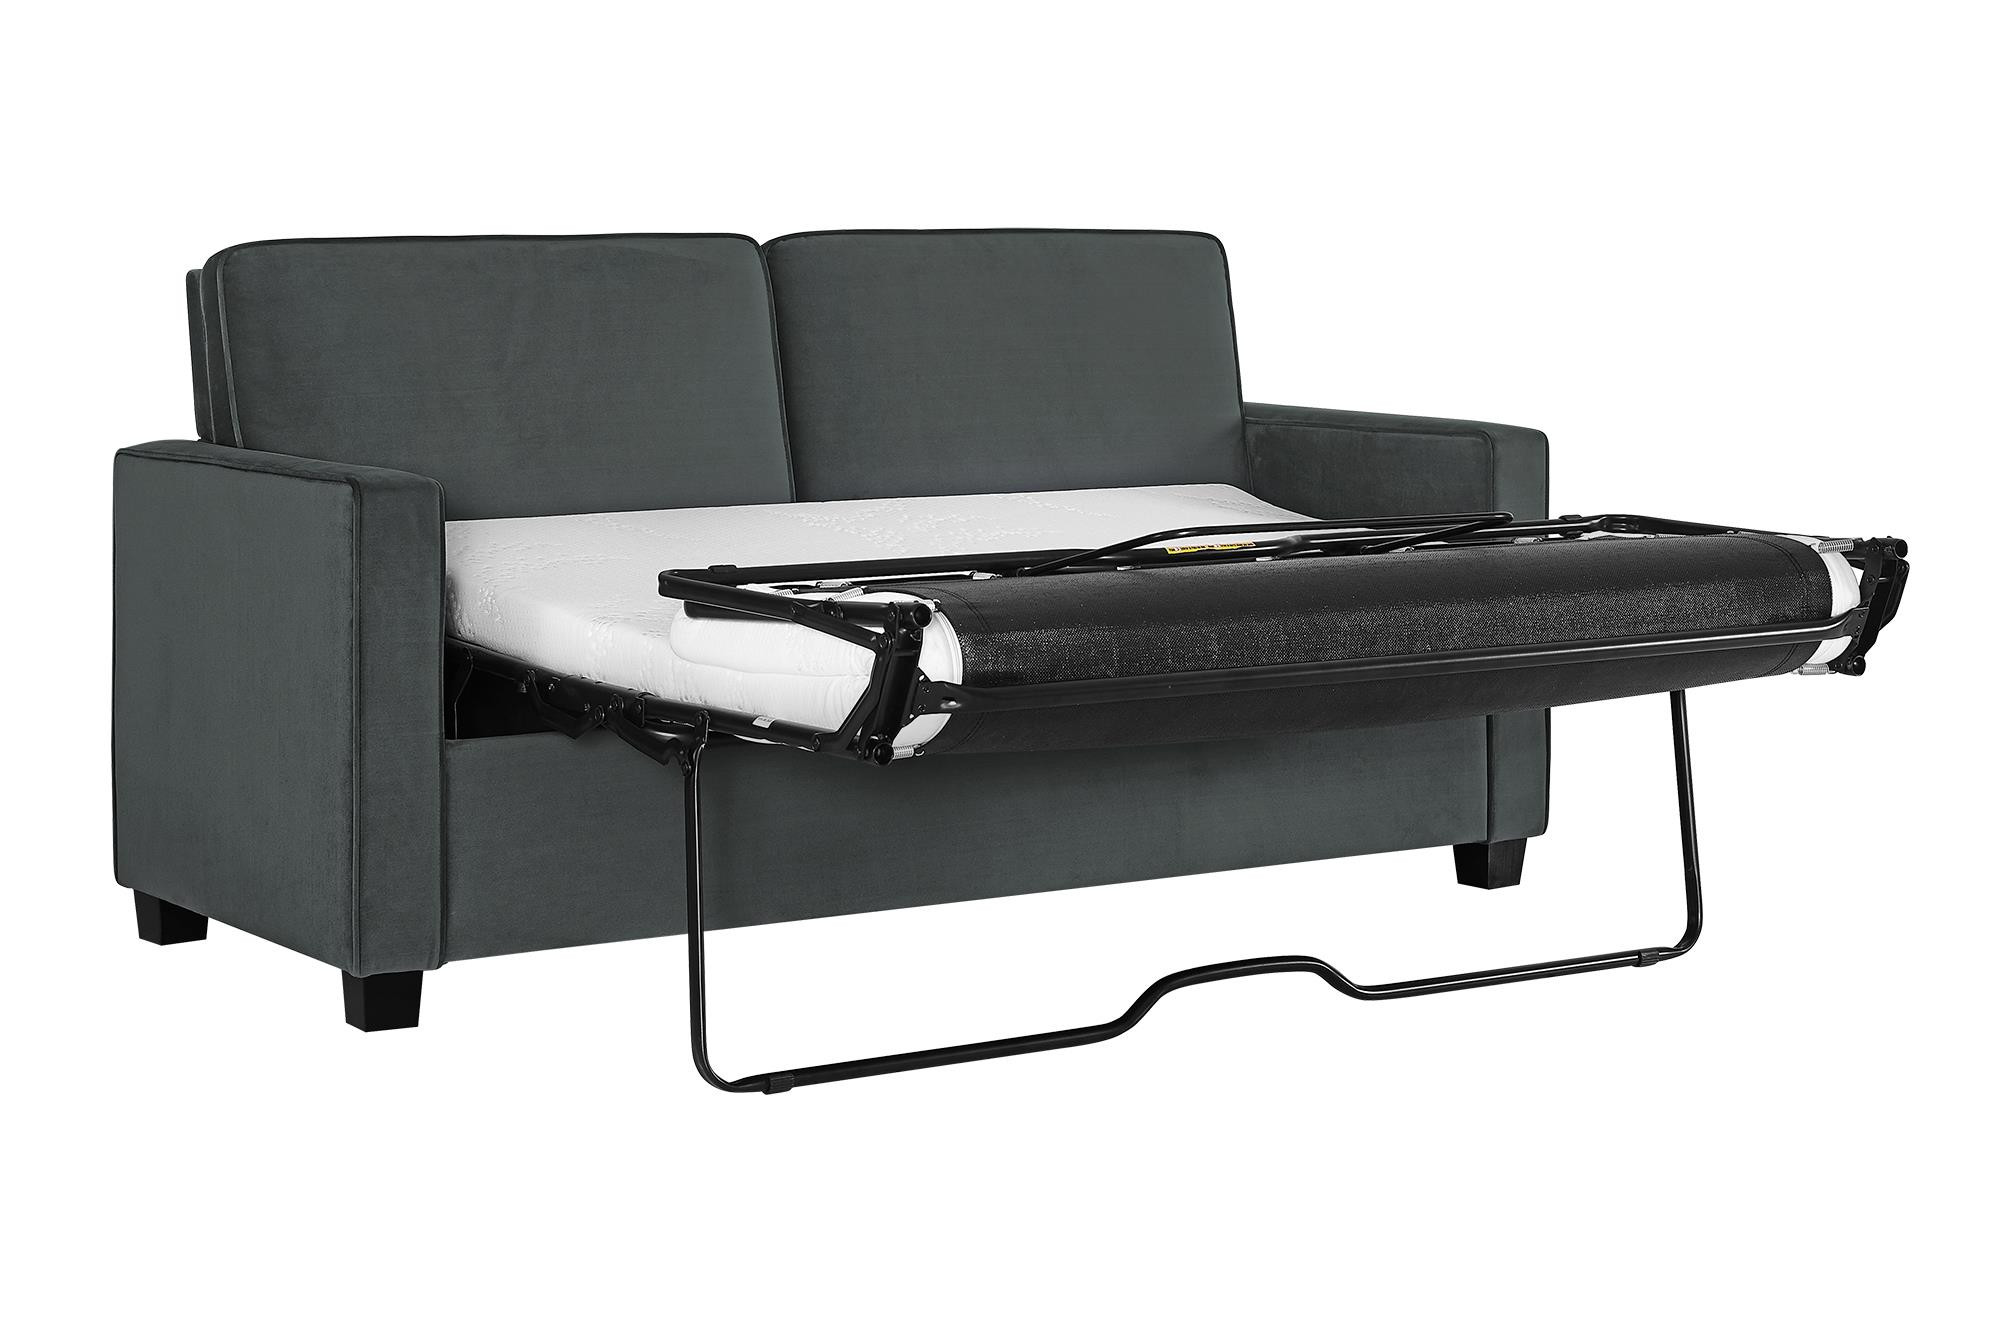 Best ideas about Velvet Sleeper Sofa
. Save or Pin Signature Sleep Mattresses Now.